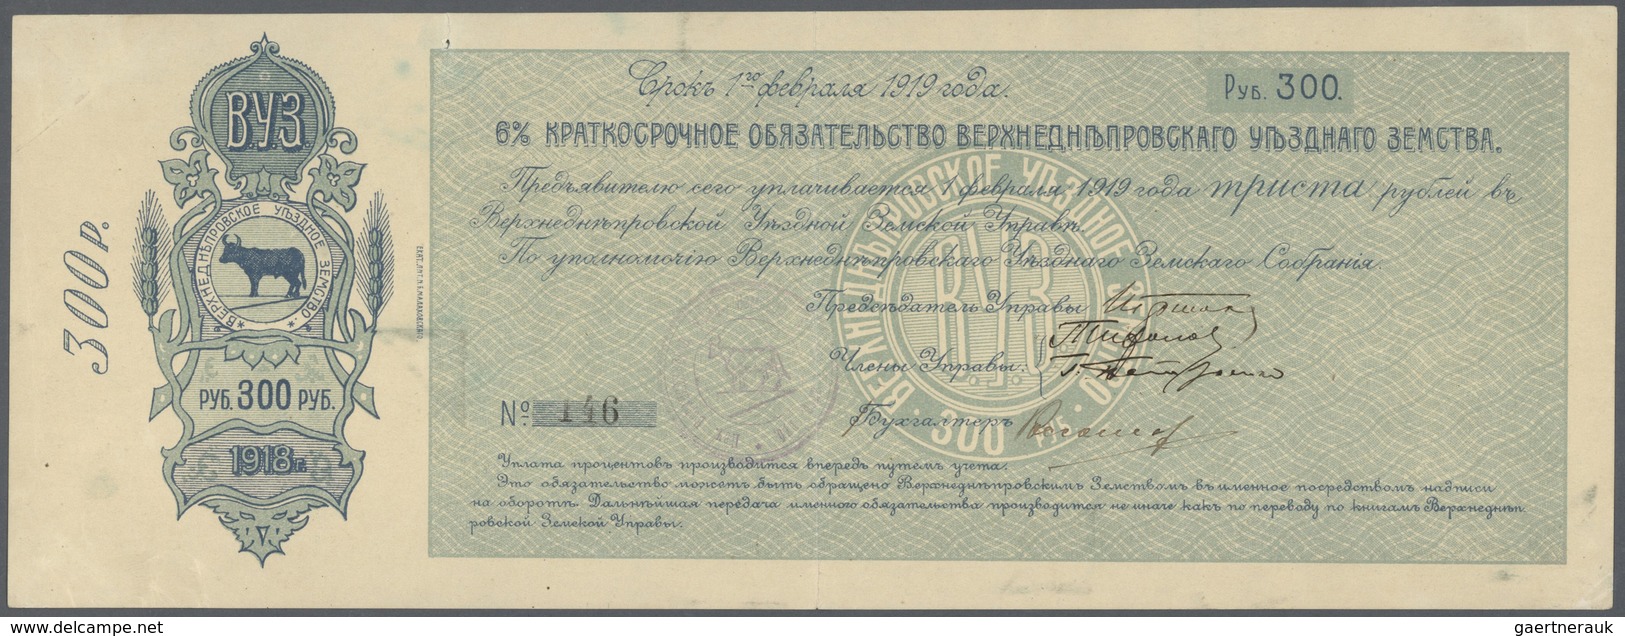 Ukraina / Ukraine: Verhnedniprovske County Council (Верхнеднпровское  Уздное  Земствo), 300 Rubles 1 - Ukraine